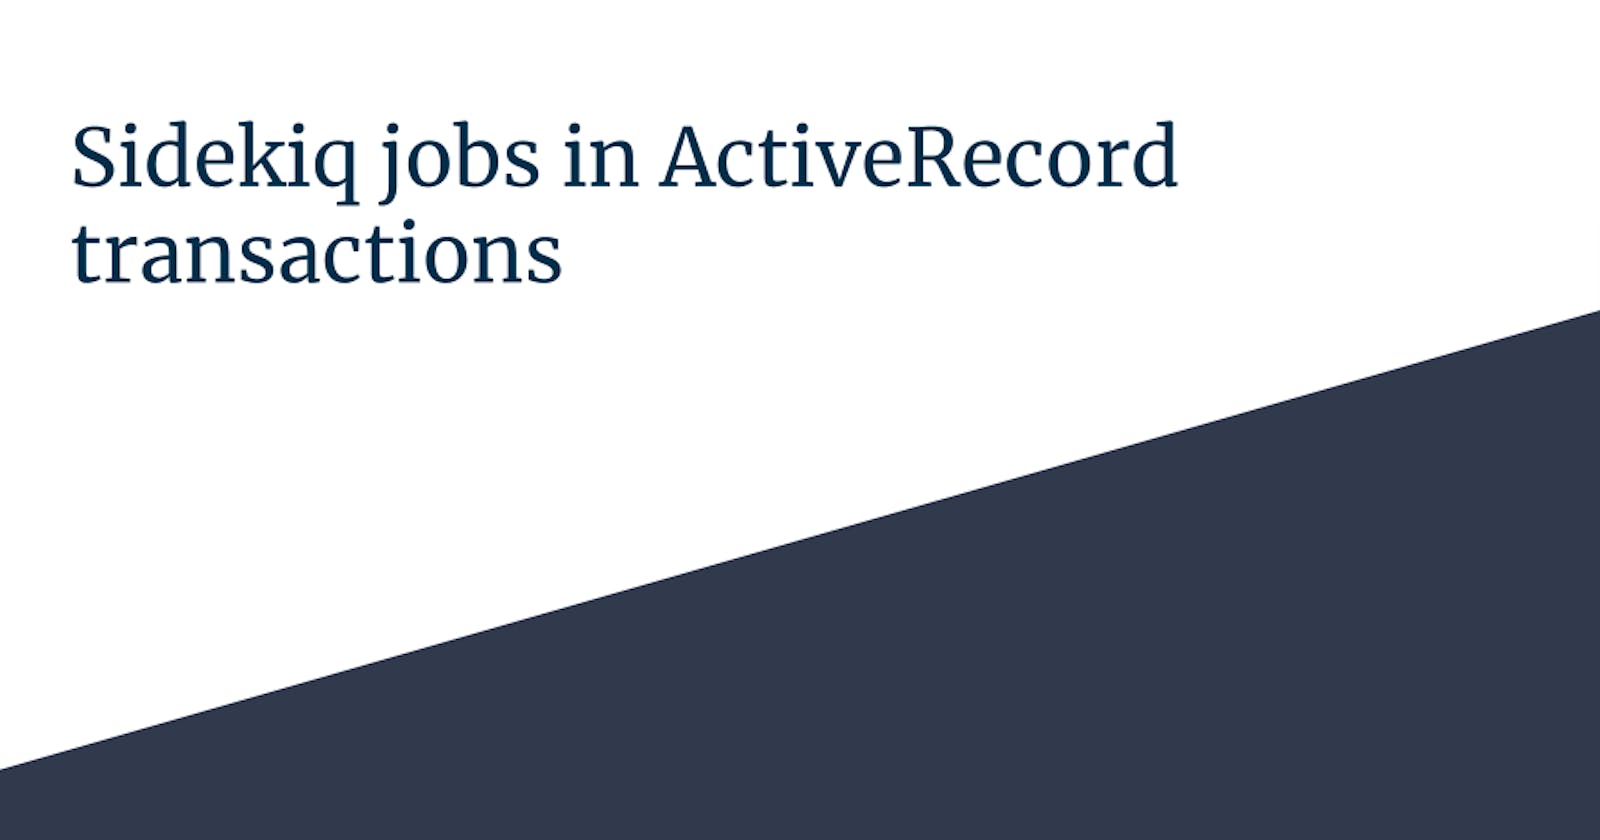 Sidekiq jobs in ActiveRecord transactions